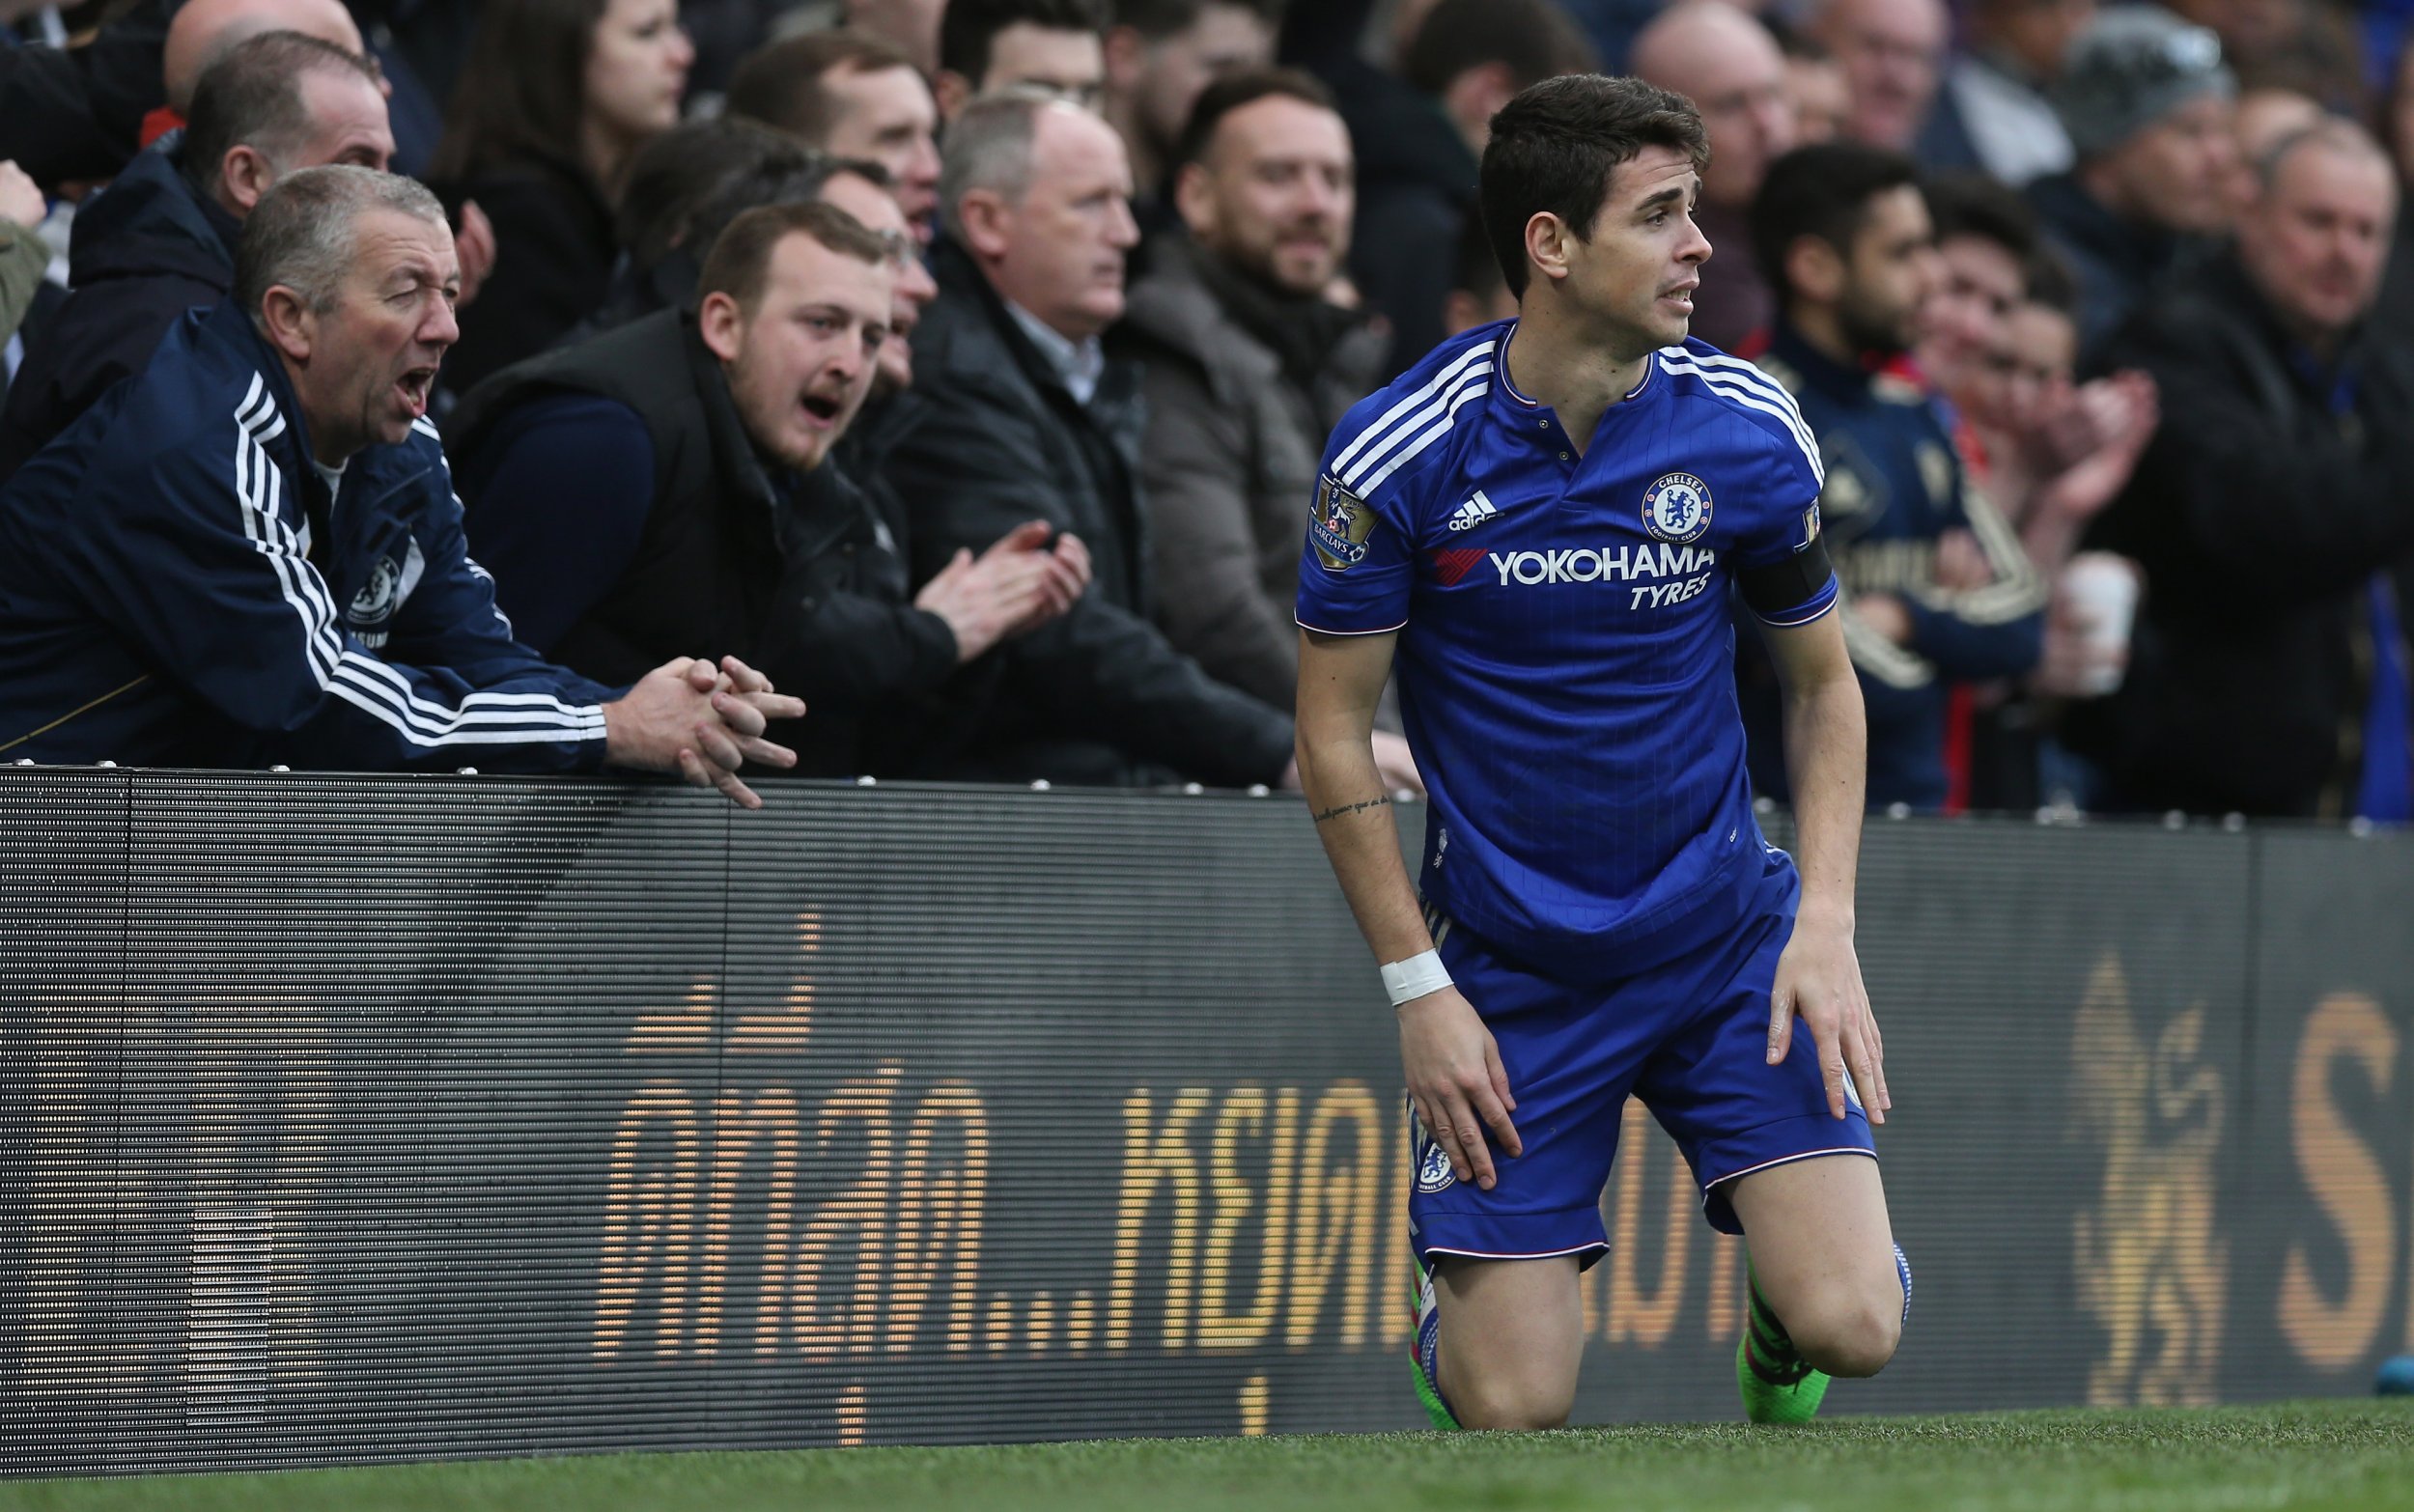 Chelsea midfielder Oscar